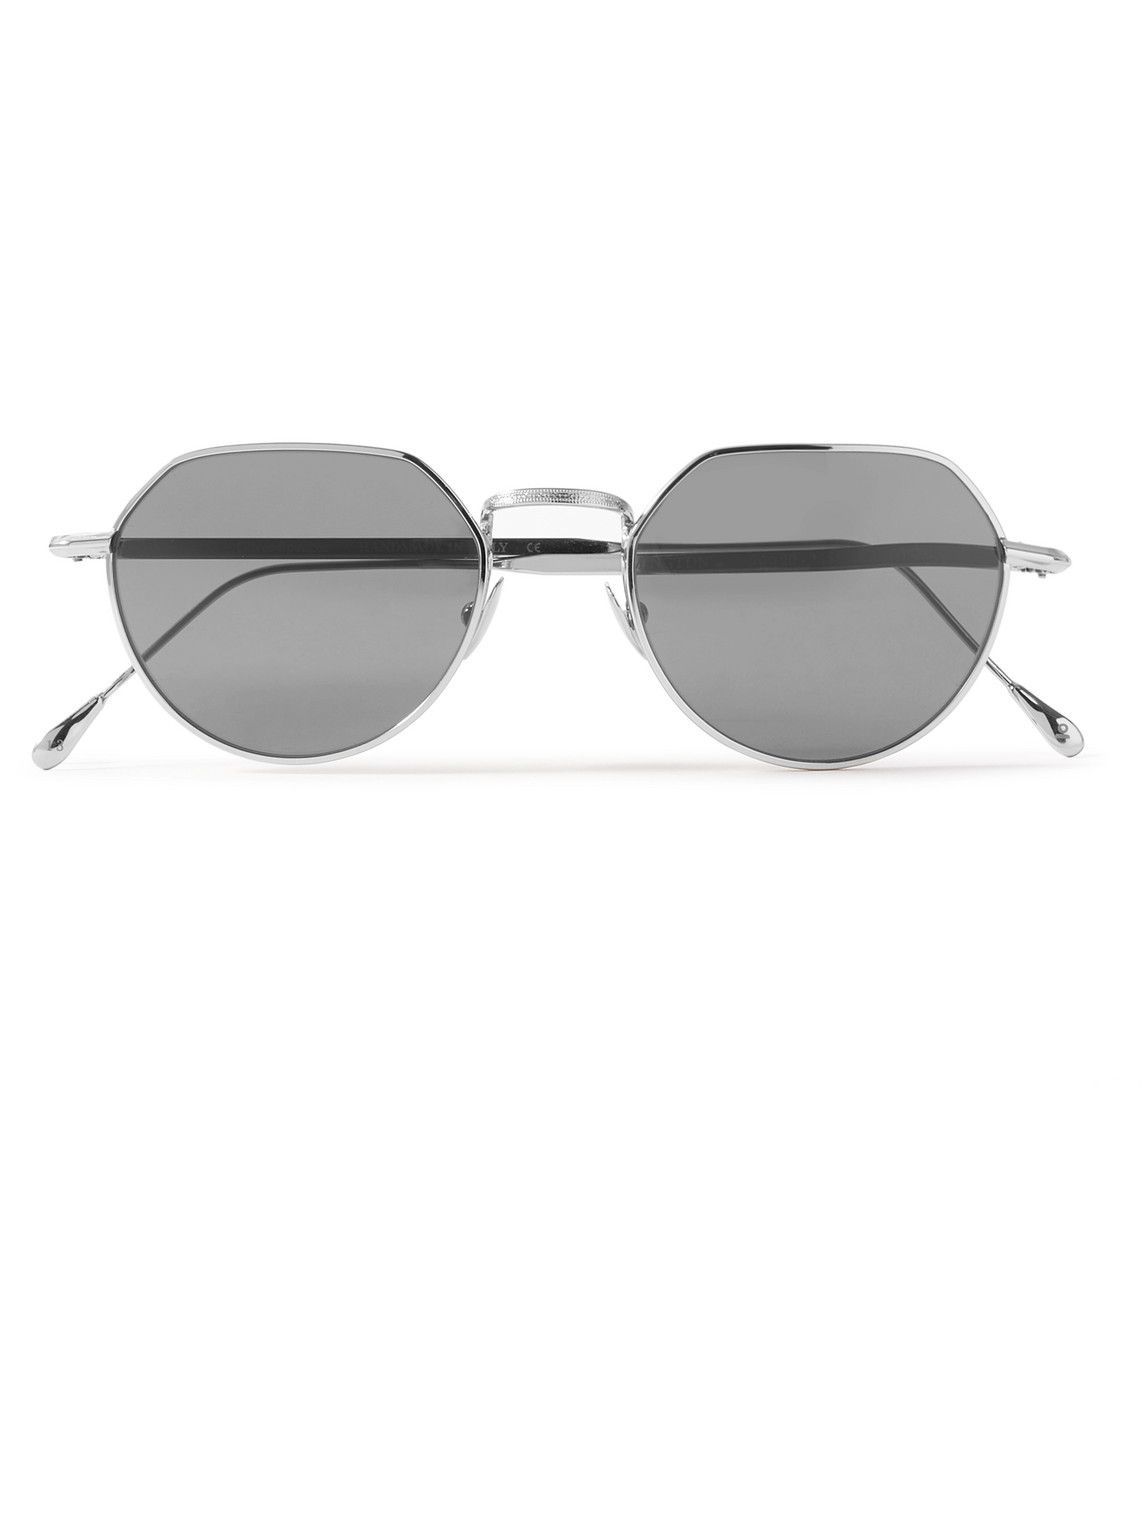 MONC - Oliver Spencer Lymington Round-Frame Gold-Tone Sunglasses Moncler